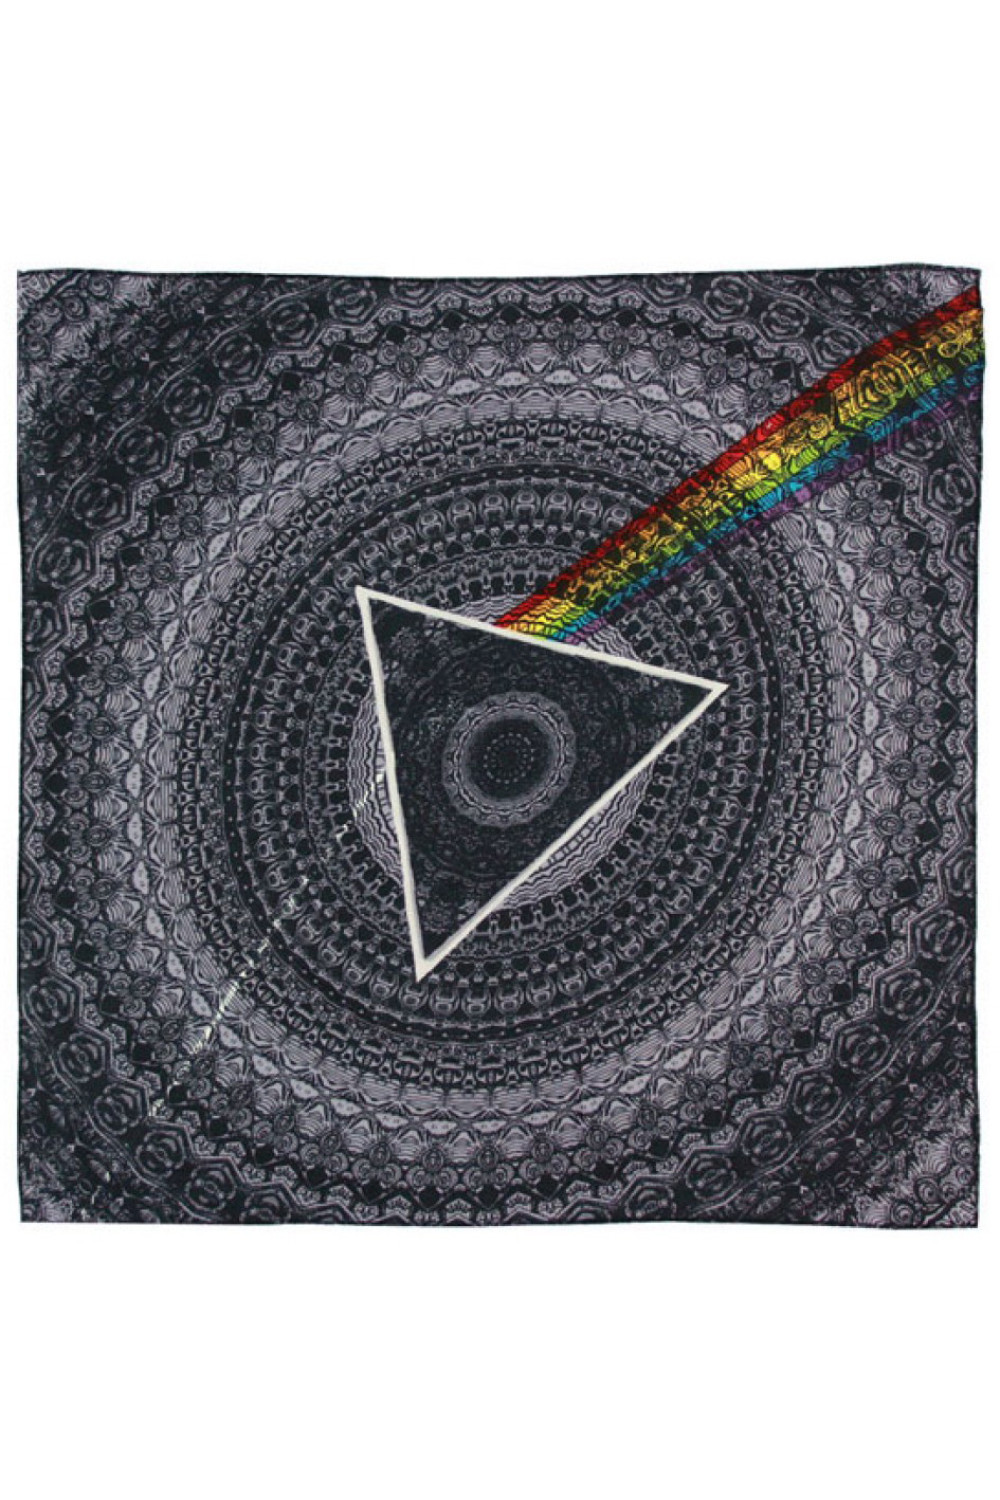 Pink Floyd The Dark Side of the Moon Shadow Bandana Black 22x22